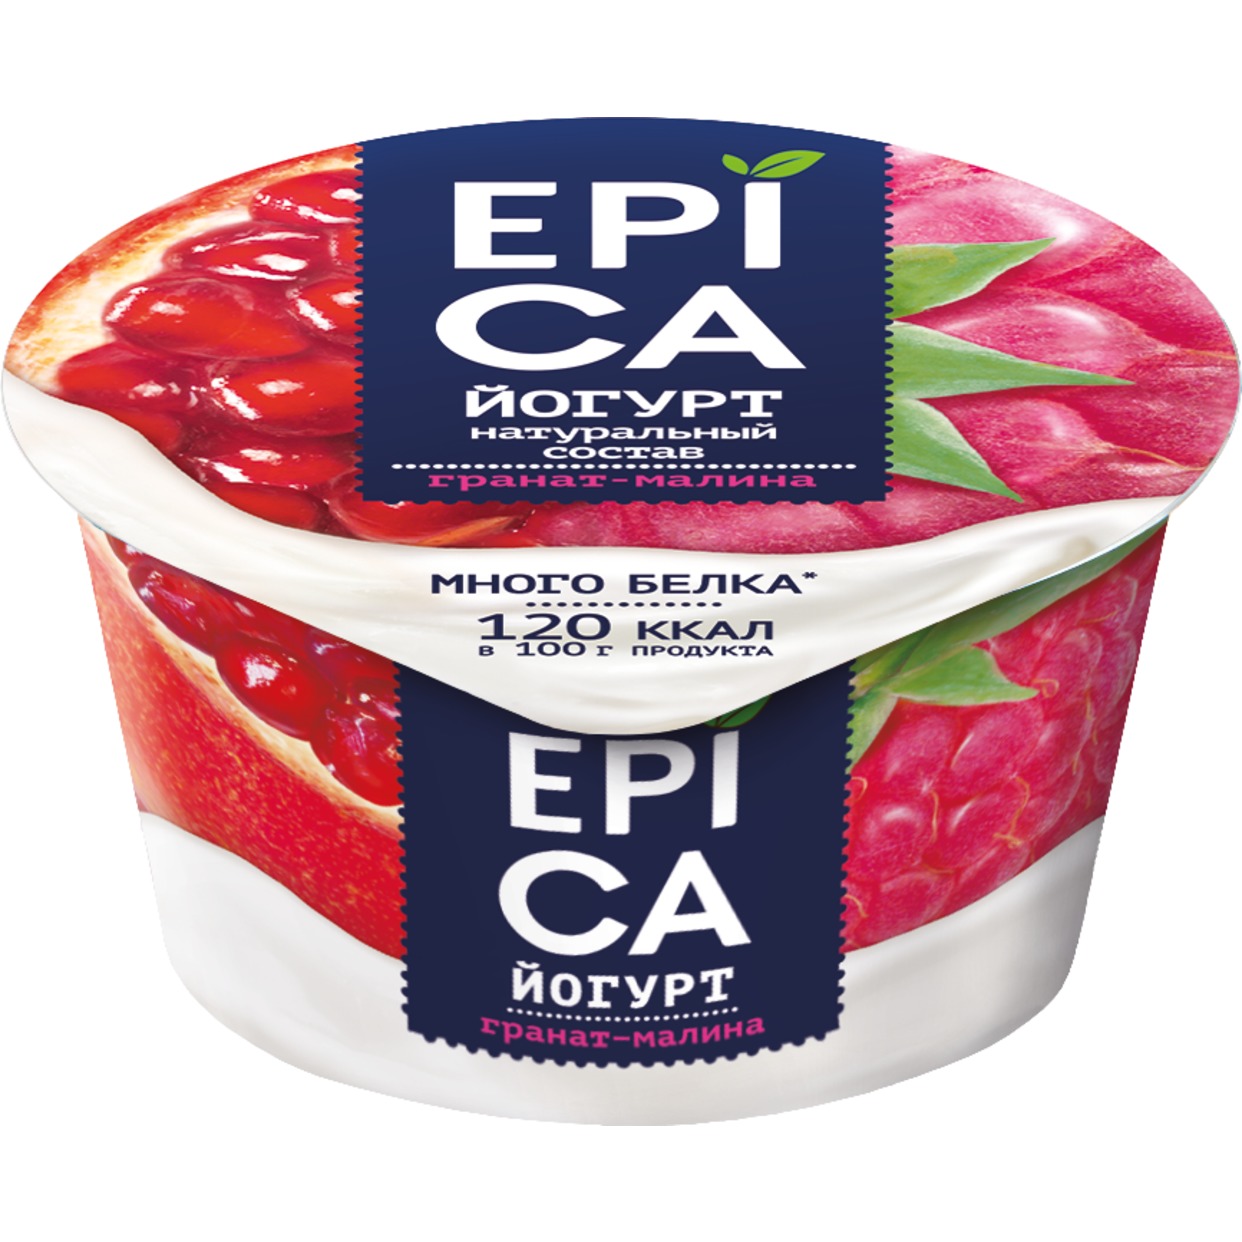 Йогурт Epica, гранат-малина, 130 г